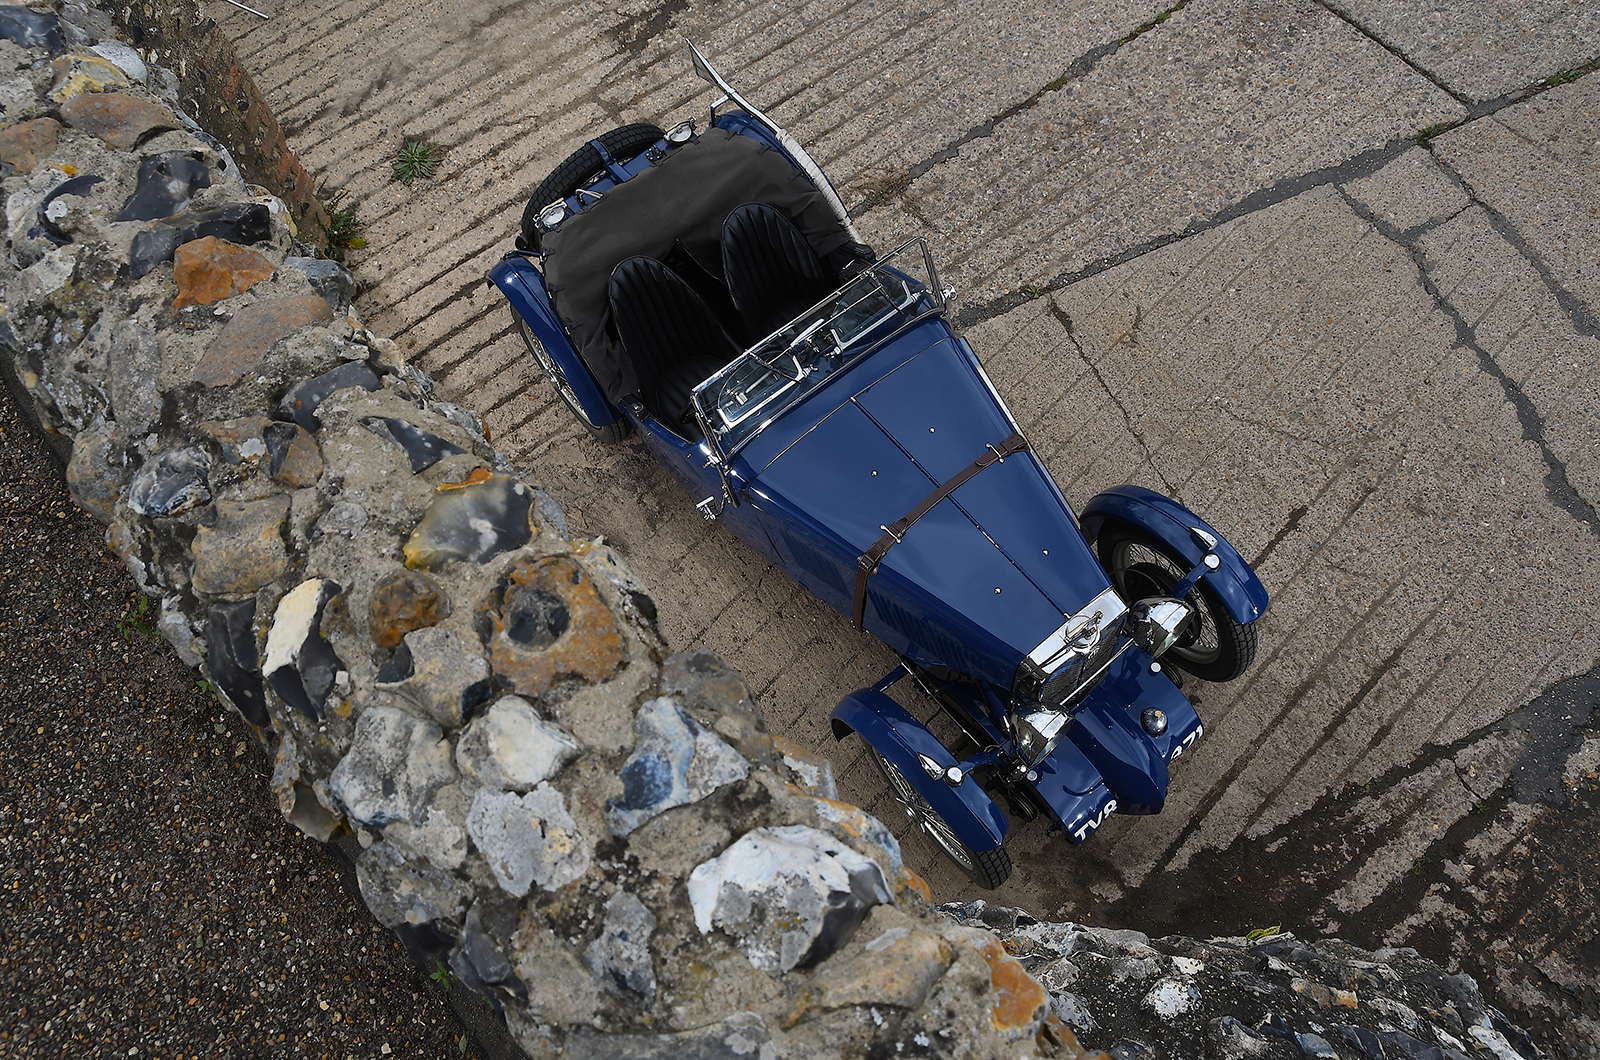 Classic & Sports Car – MG J4: Abingdon’s giant killer